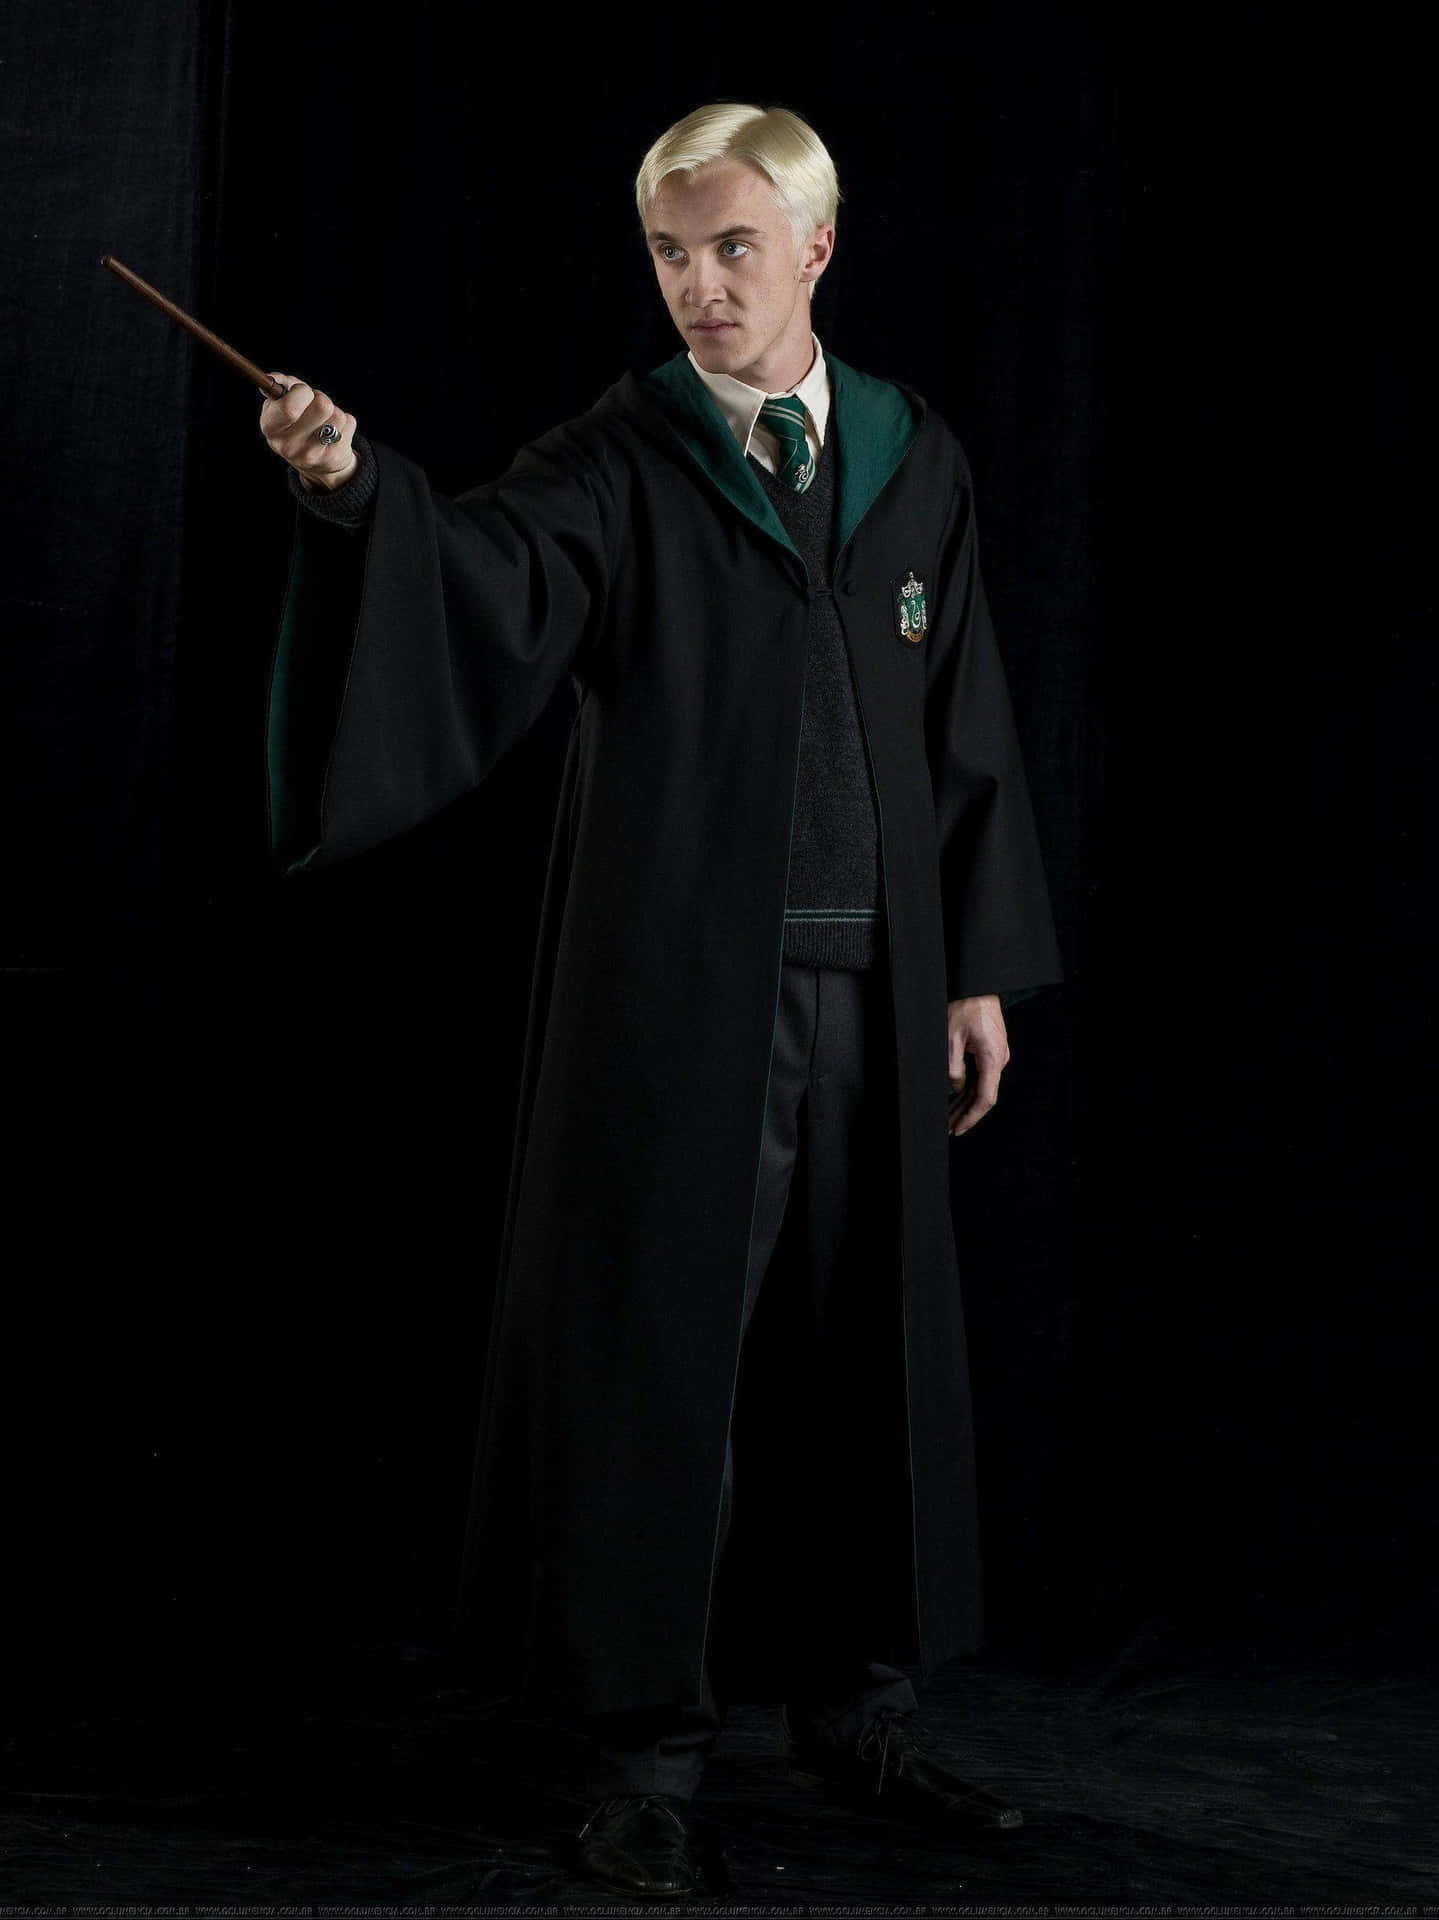 Draco Malfoy, Slytherin from Harry Potter